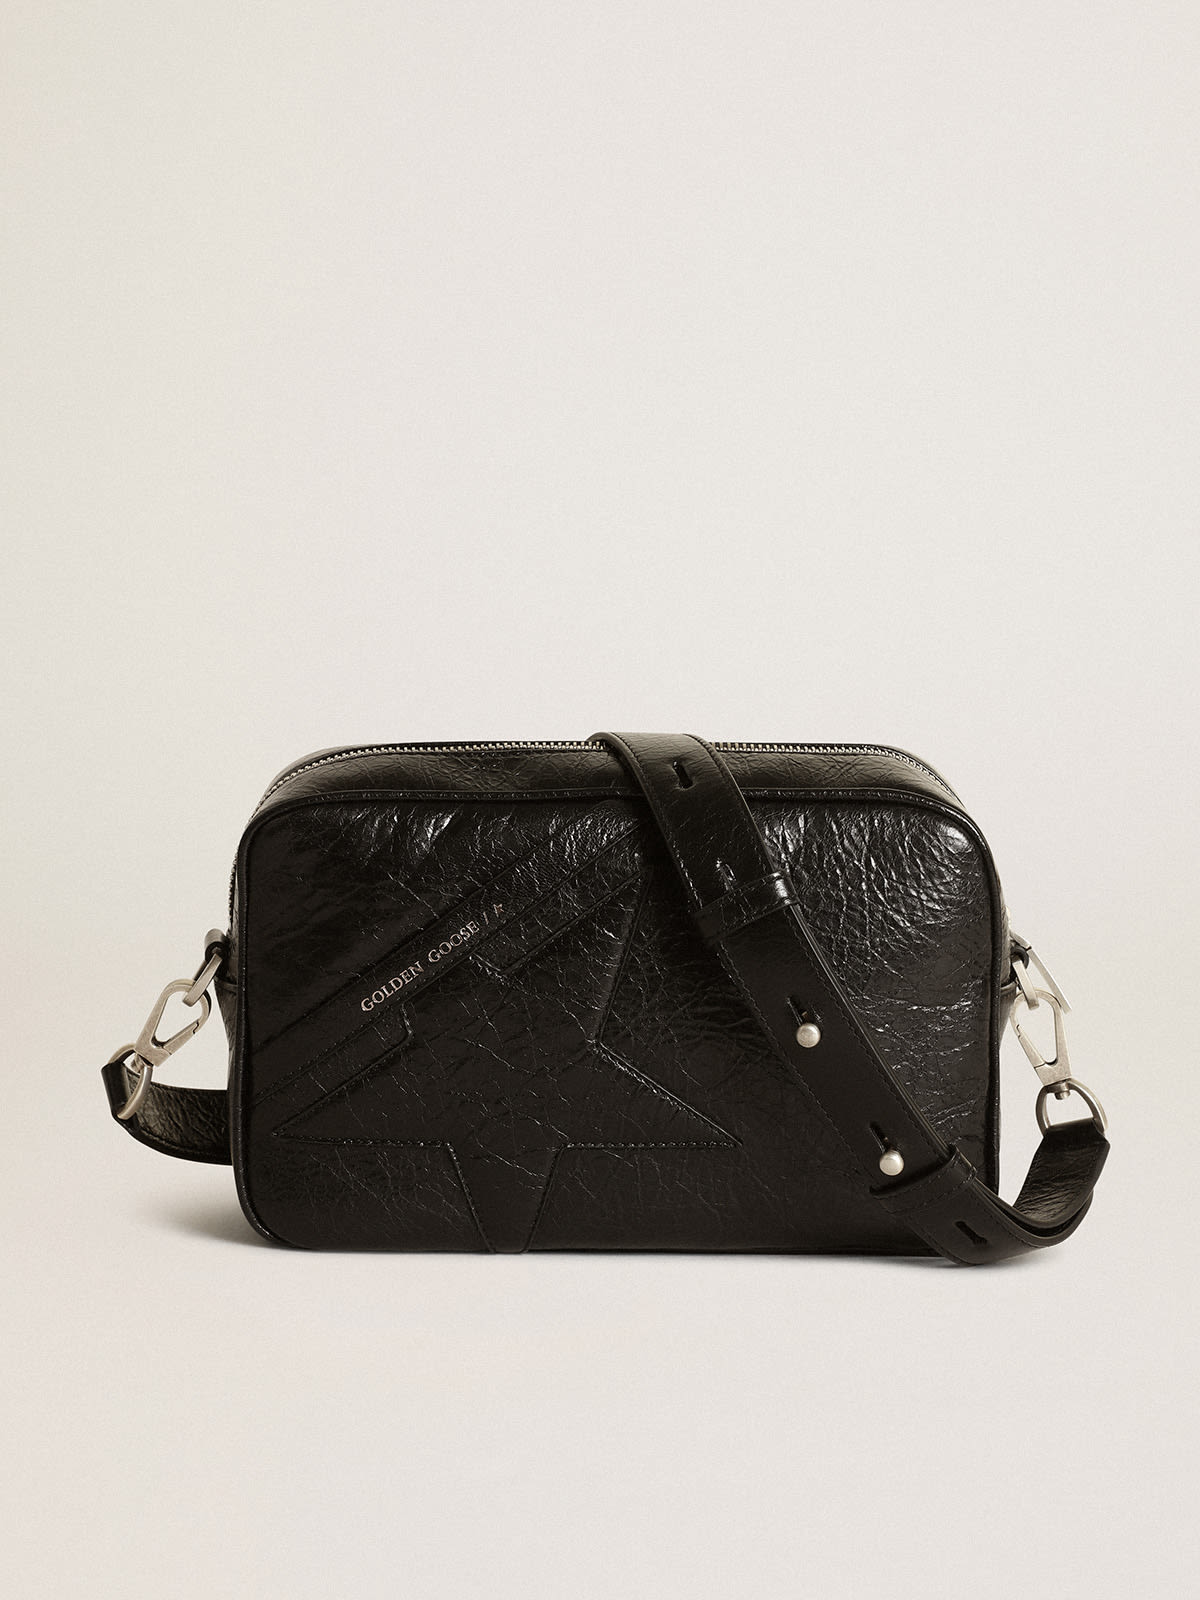 Golden Goose - Borsa Star Bag in pelle lucida color nero con stella ton sur ton in 